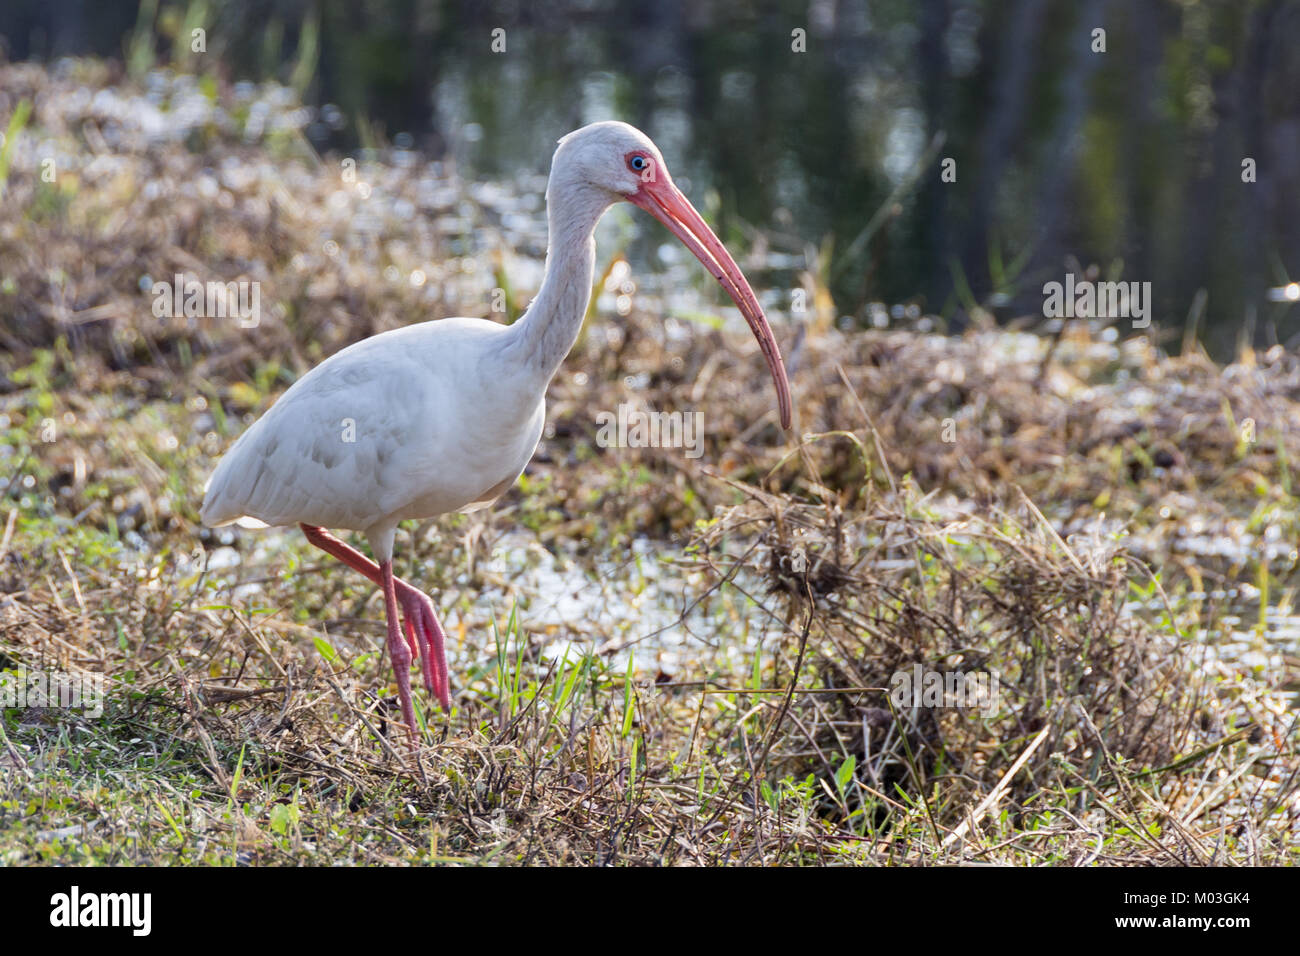 White ibis in national park Stock Photo